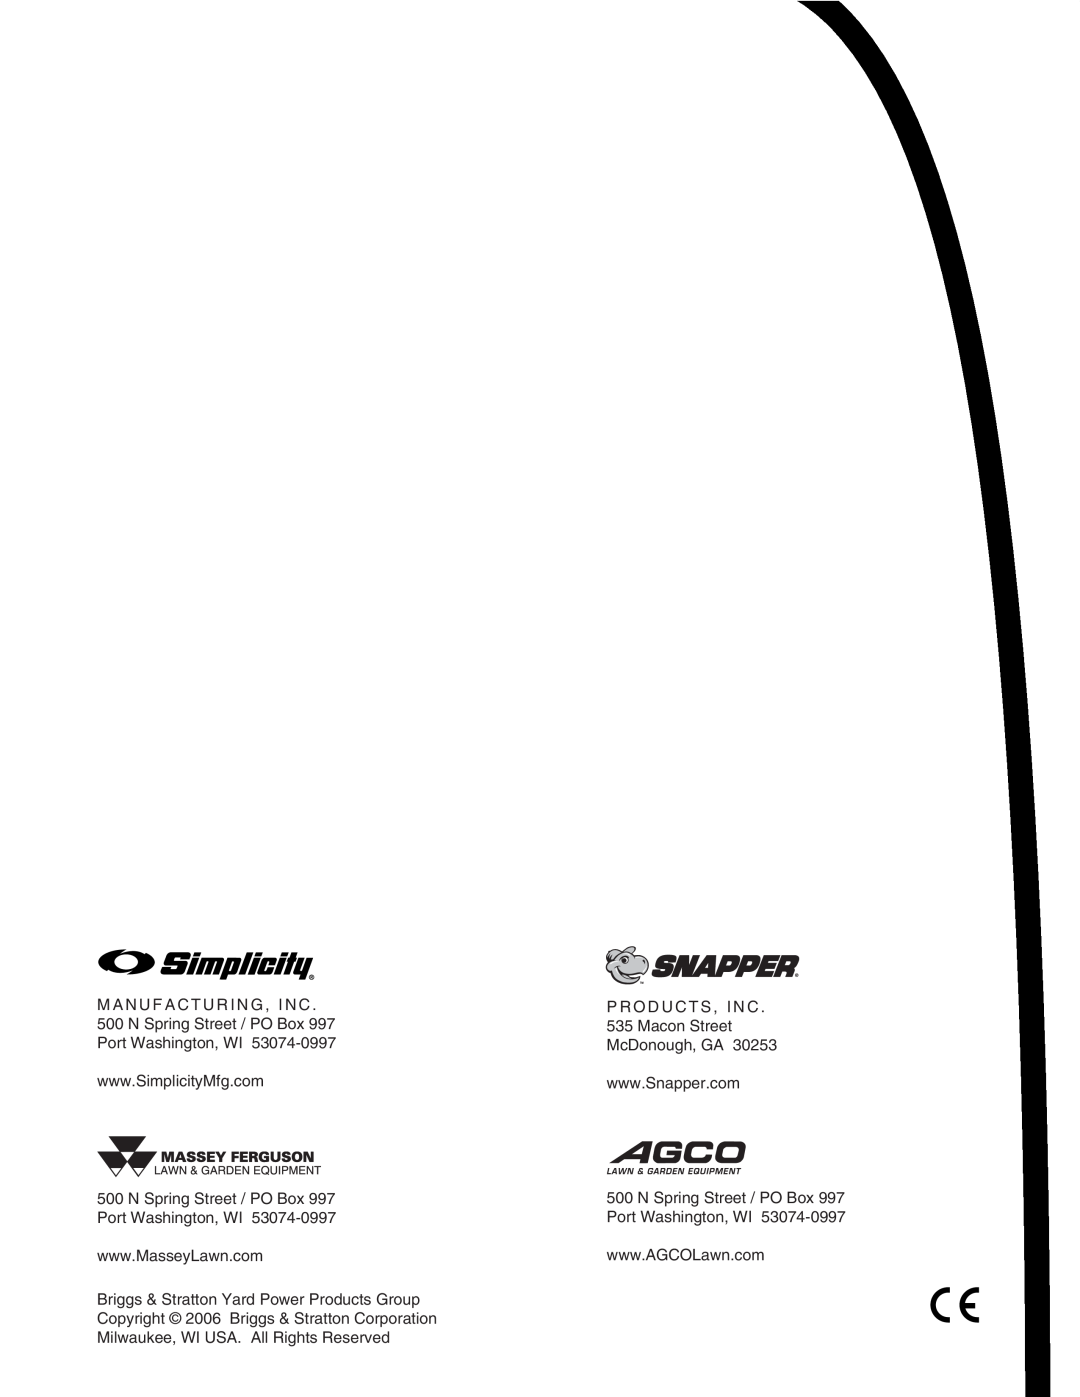 Snapper 400 Series manual 